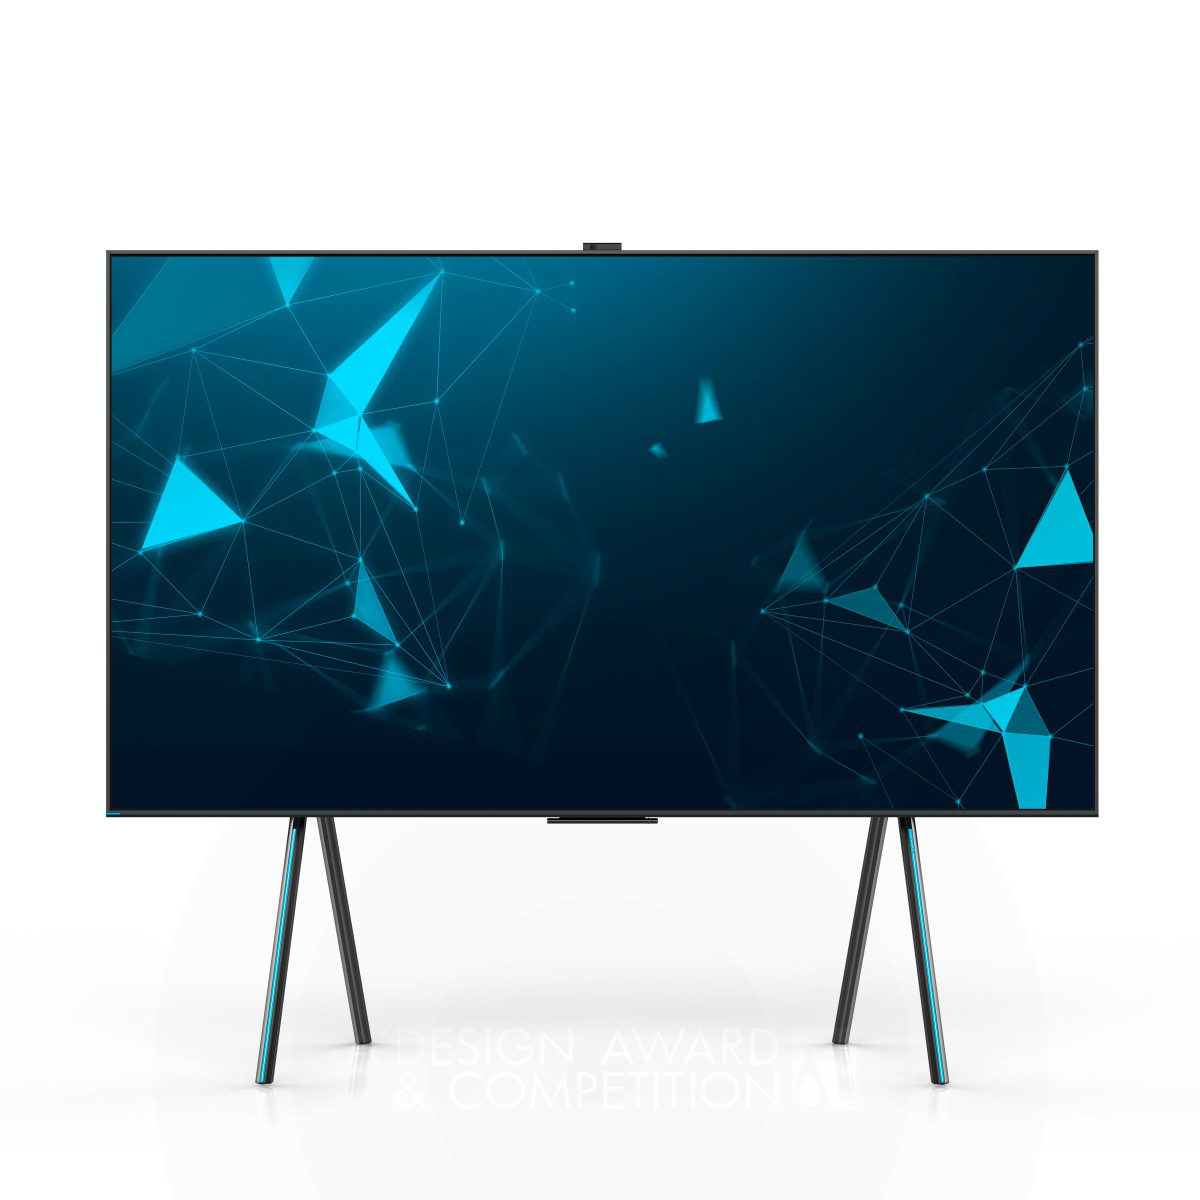 Konka Industrial Design Team Unveils A6Pro Series MINILED TV